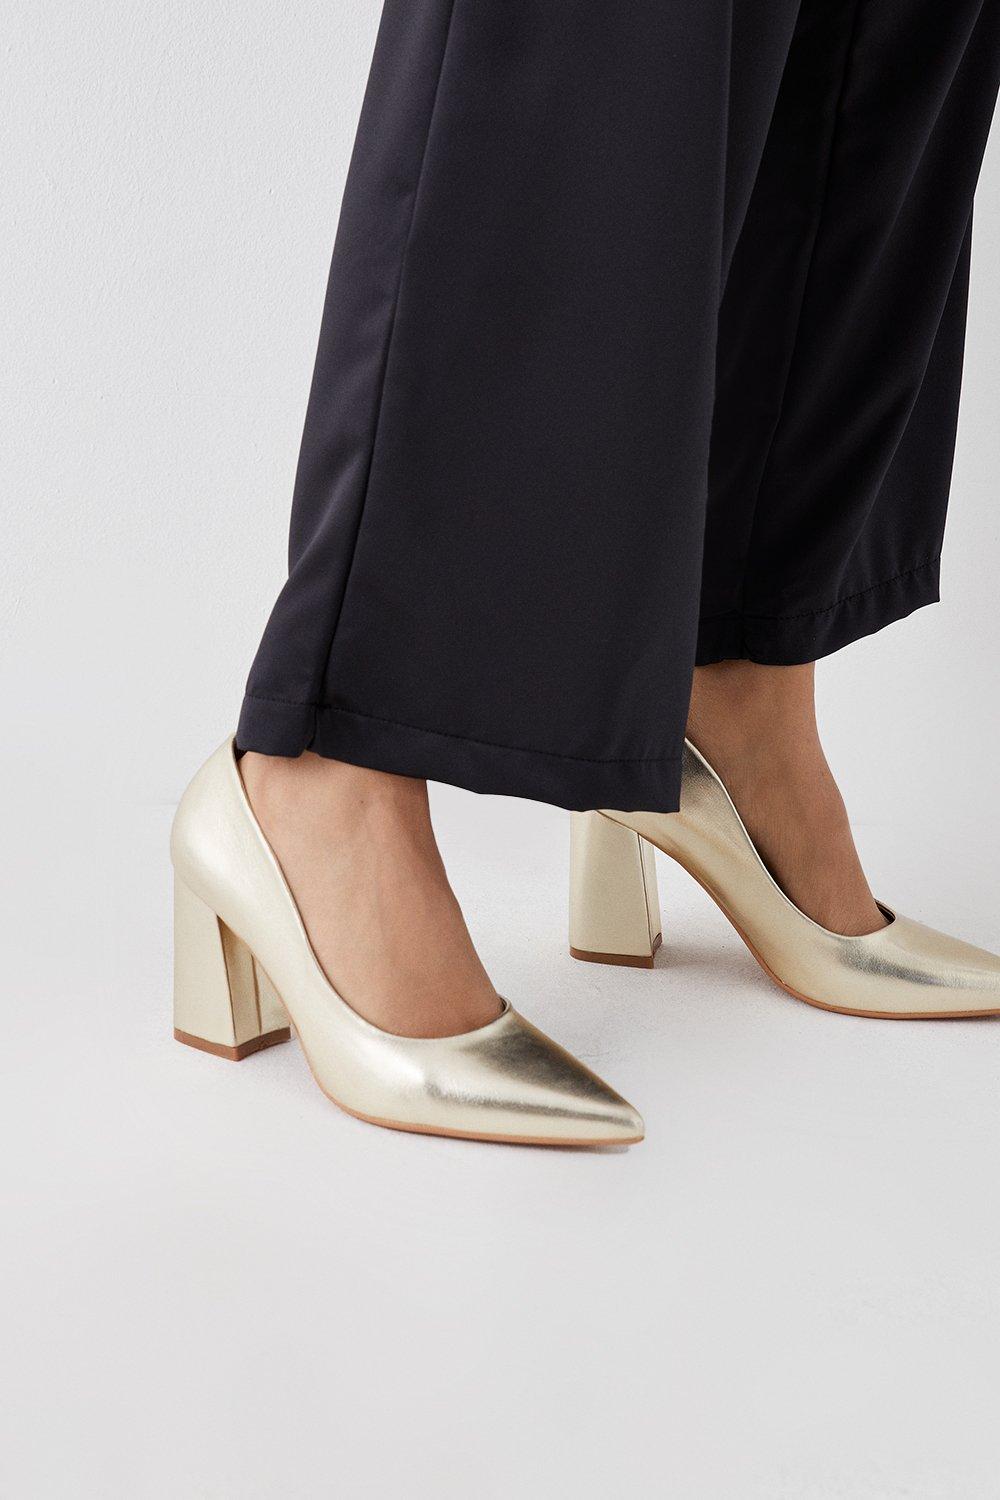 Women’s Faith: Carly Block Heel Court Shoes - gold - 7